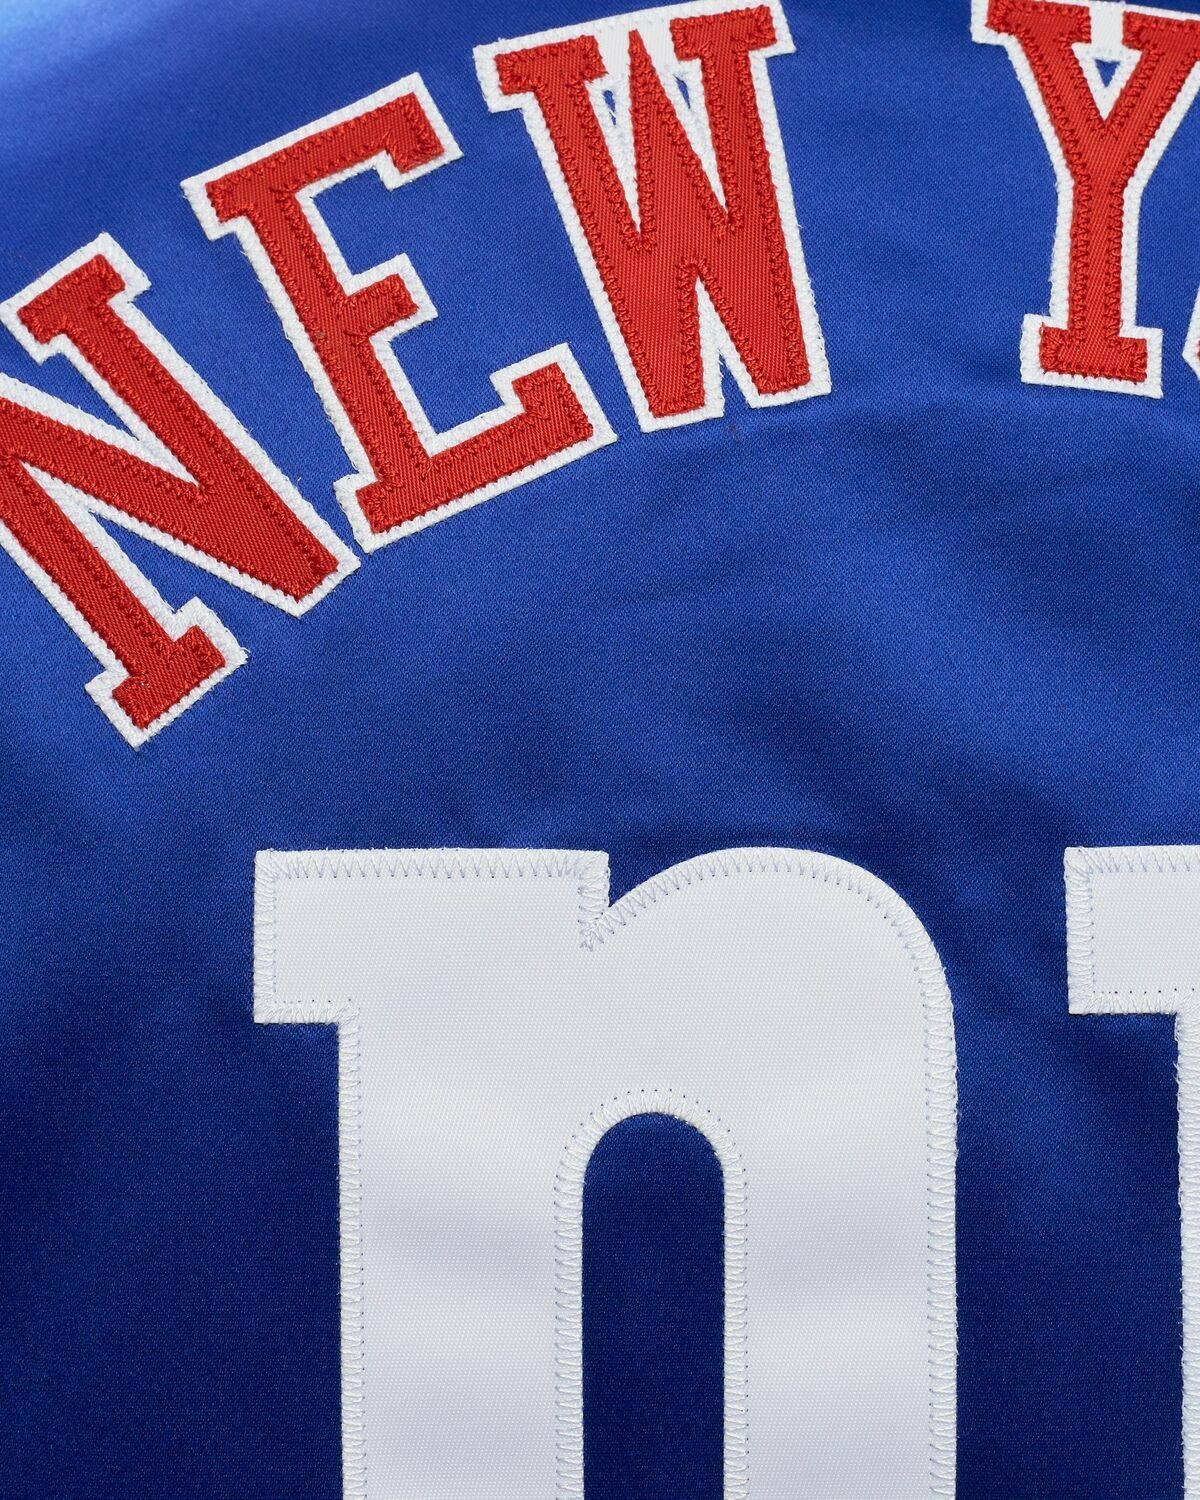 Mitchell & Ness Nfl Heavyweight Satin Jacket New York Giants Blue - Mens - College Jackets